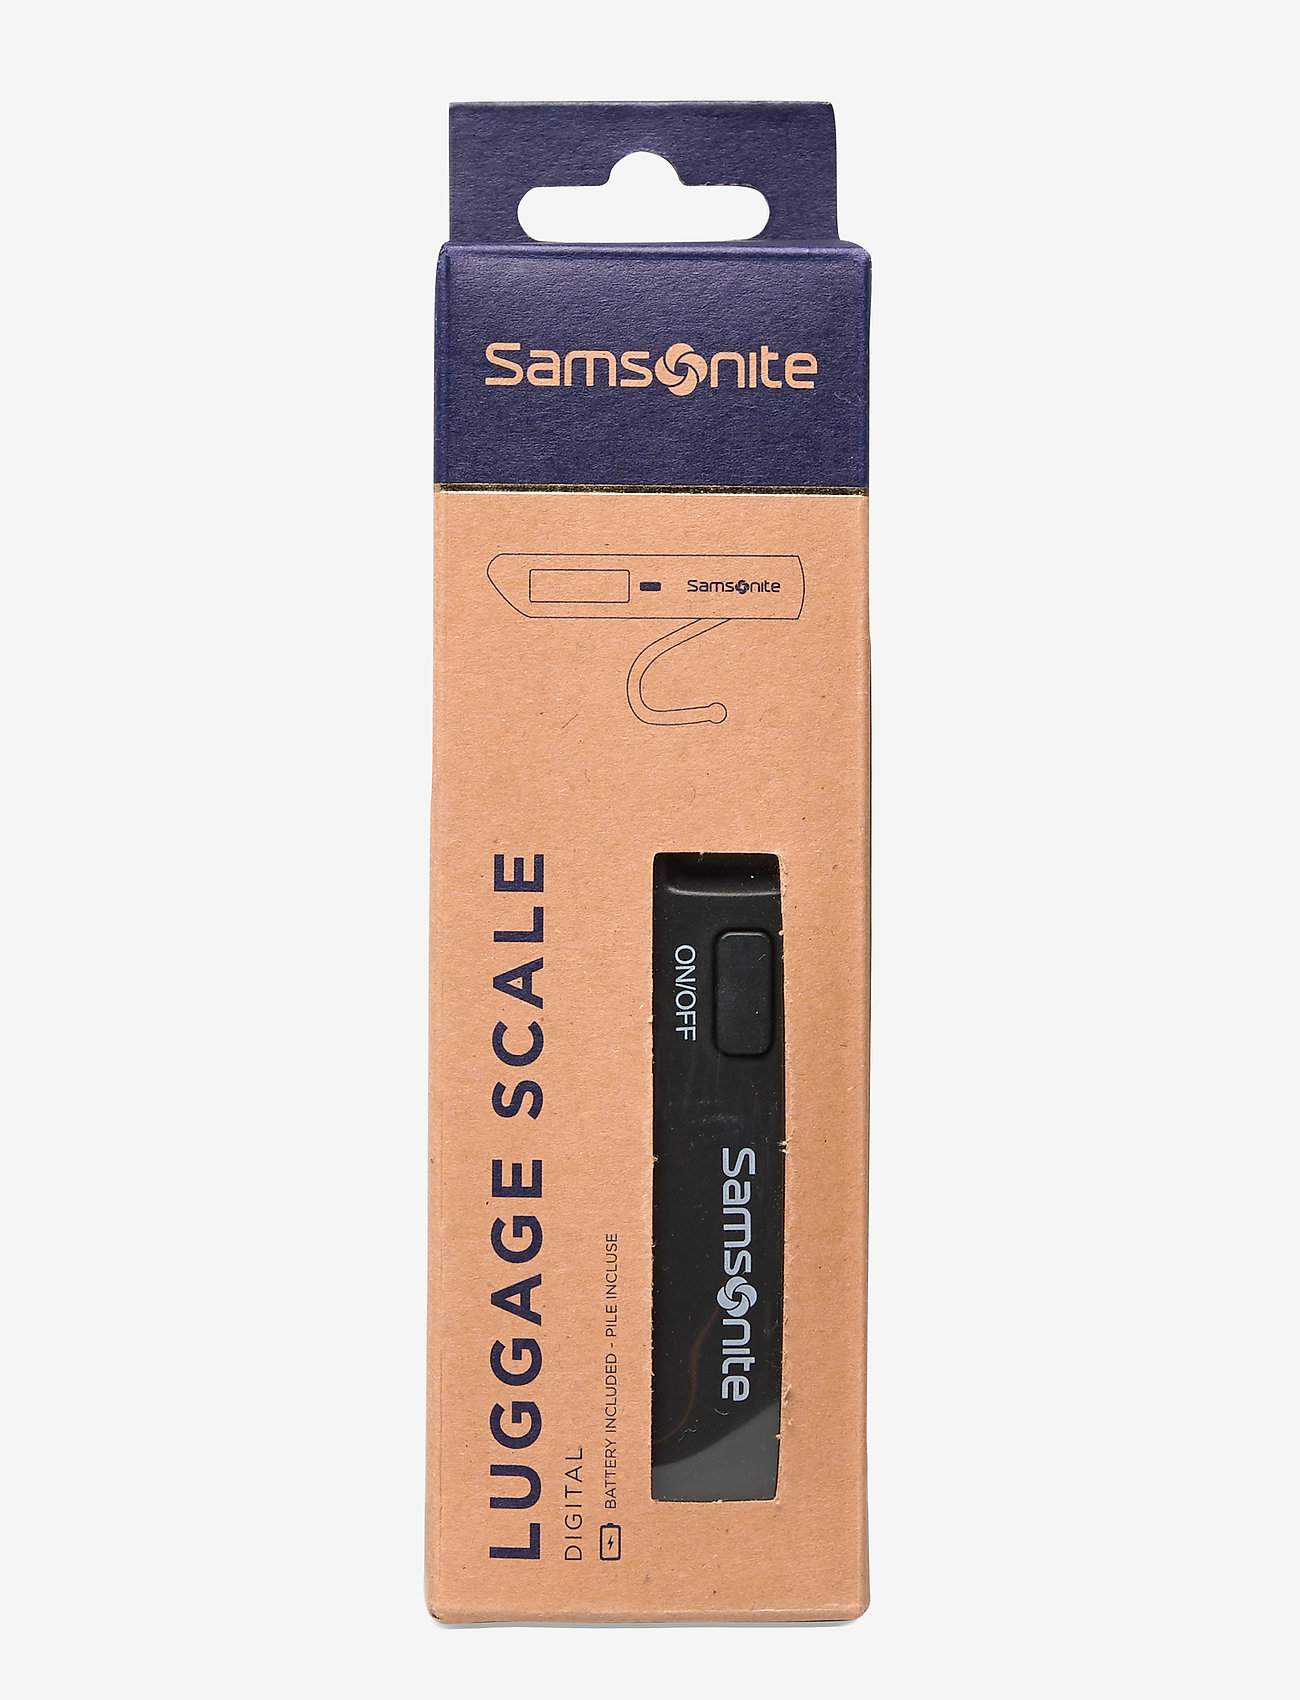 Samsonite - DIGITAL LUGGAGE SCALE - black - 0